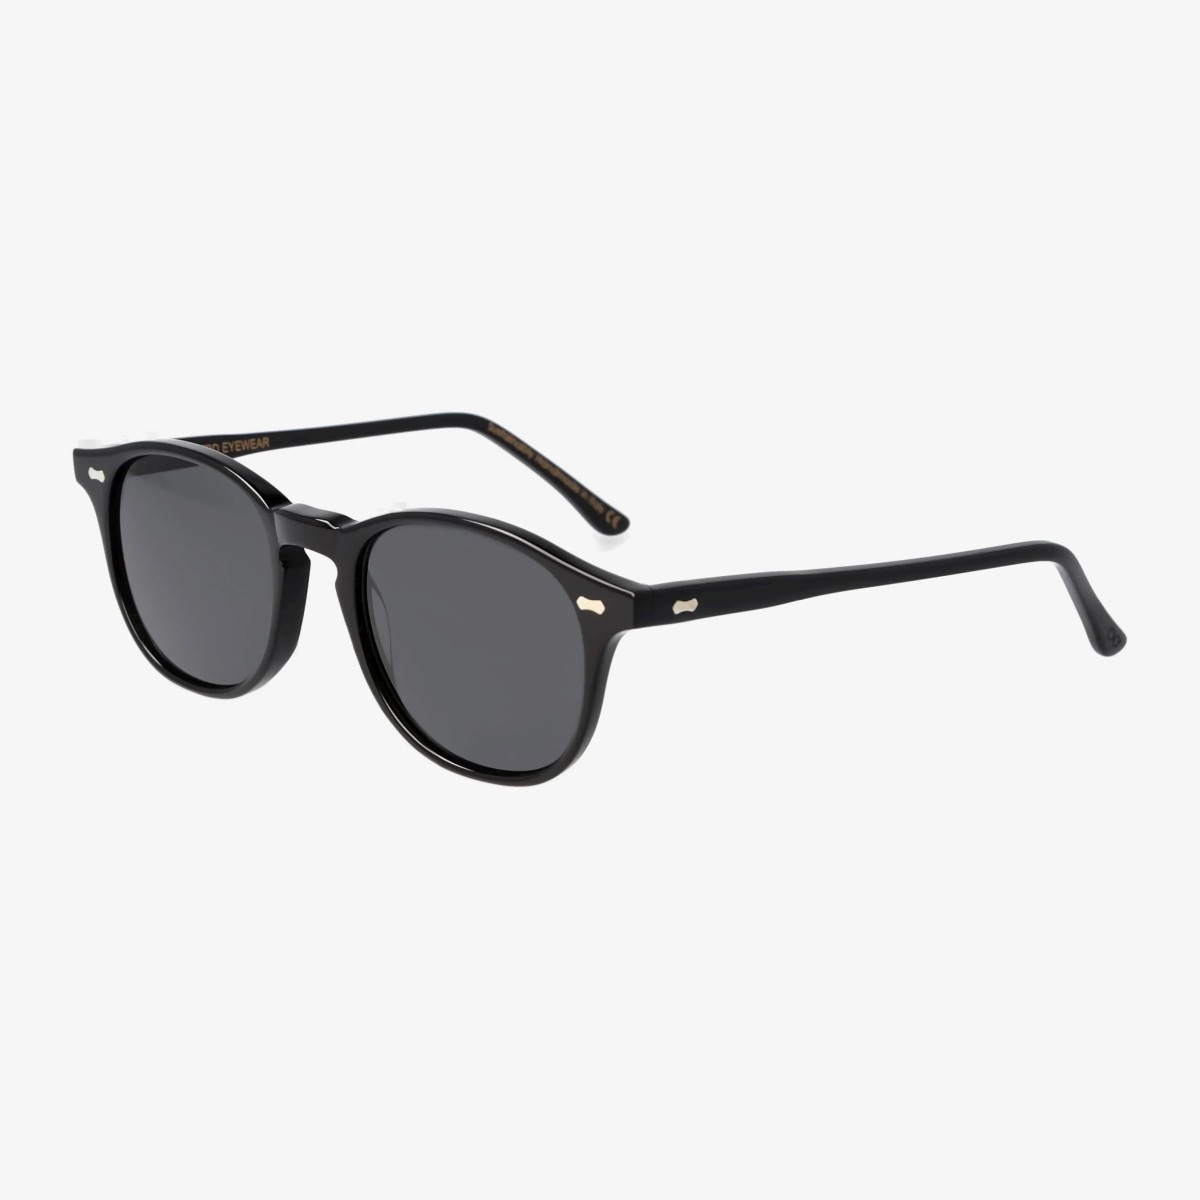 TBD Eyewear Shetland black frame grey lenses sunglasses